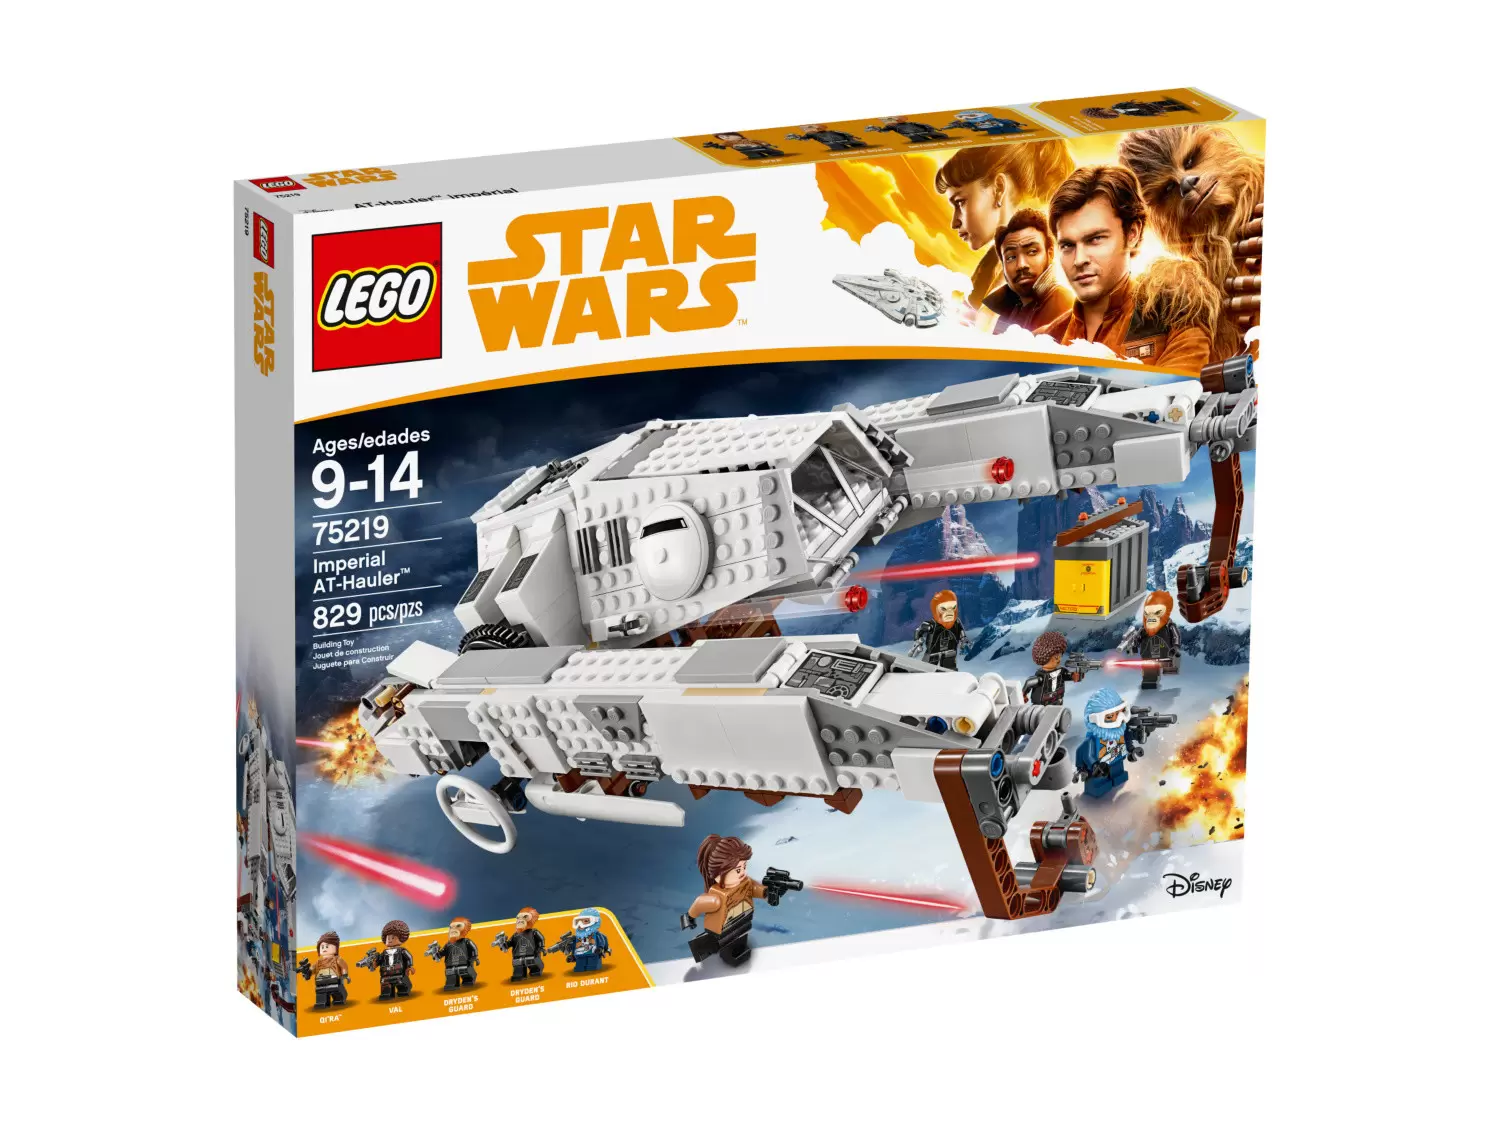 LEGO Star Wars - Imperial AT-Hauler